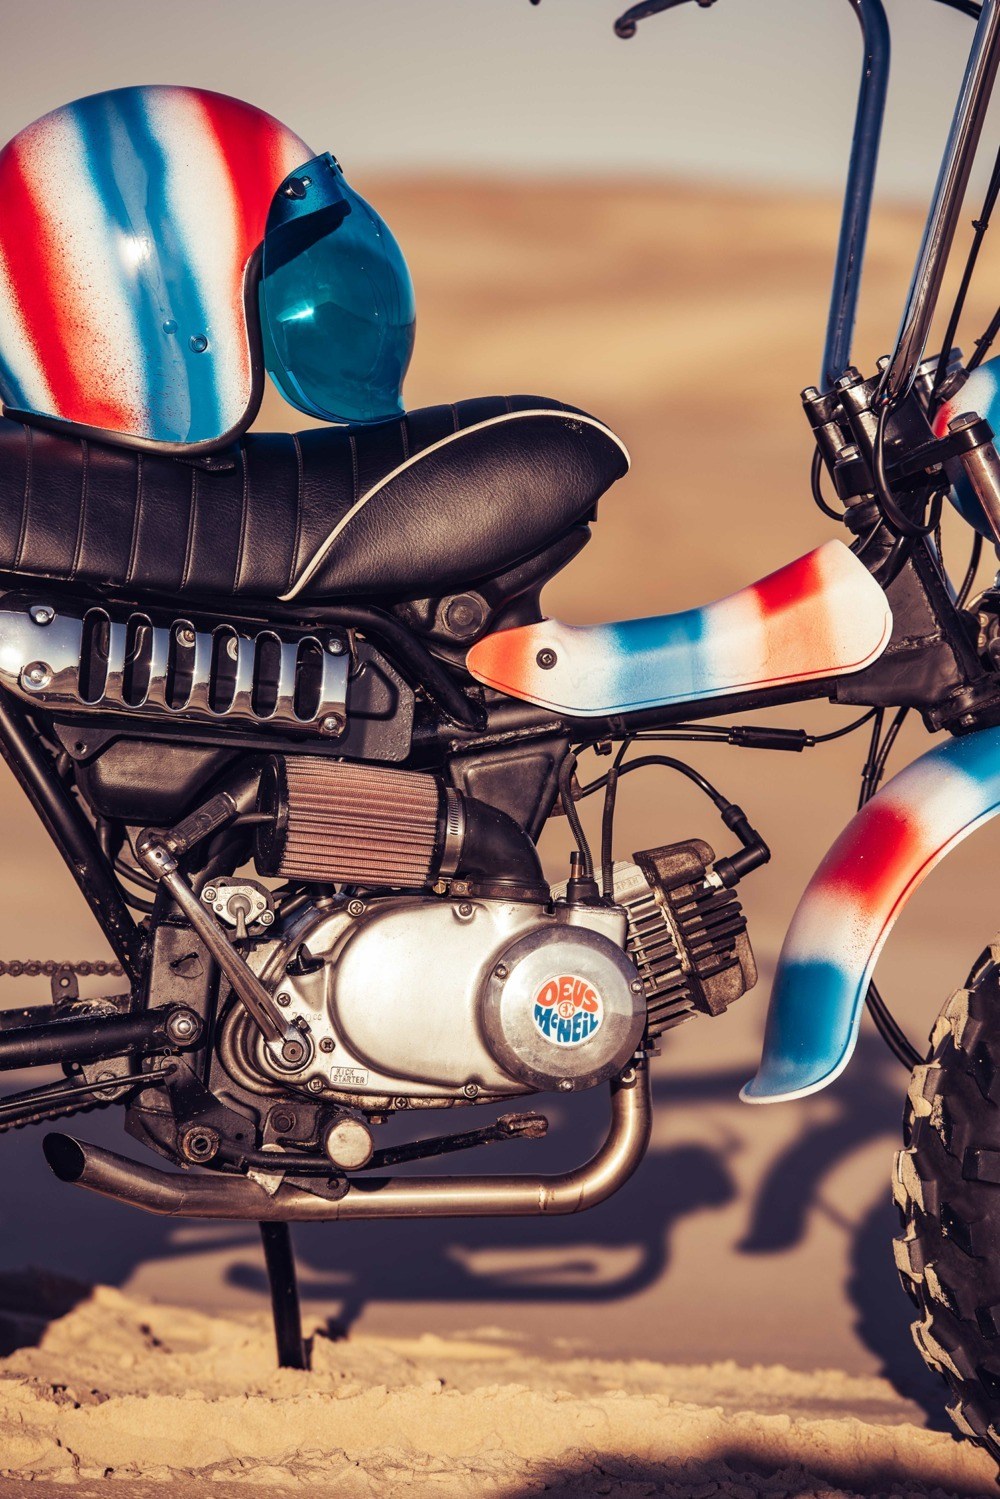 imagen 9 de The Goof Bike, una verdadera moto de playa.